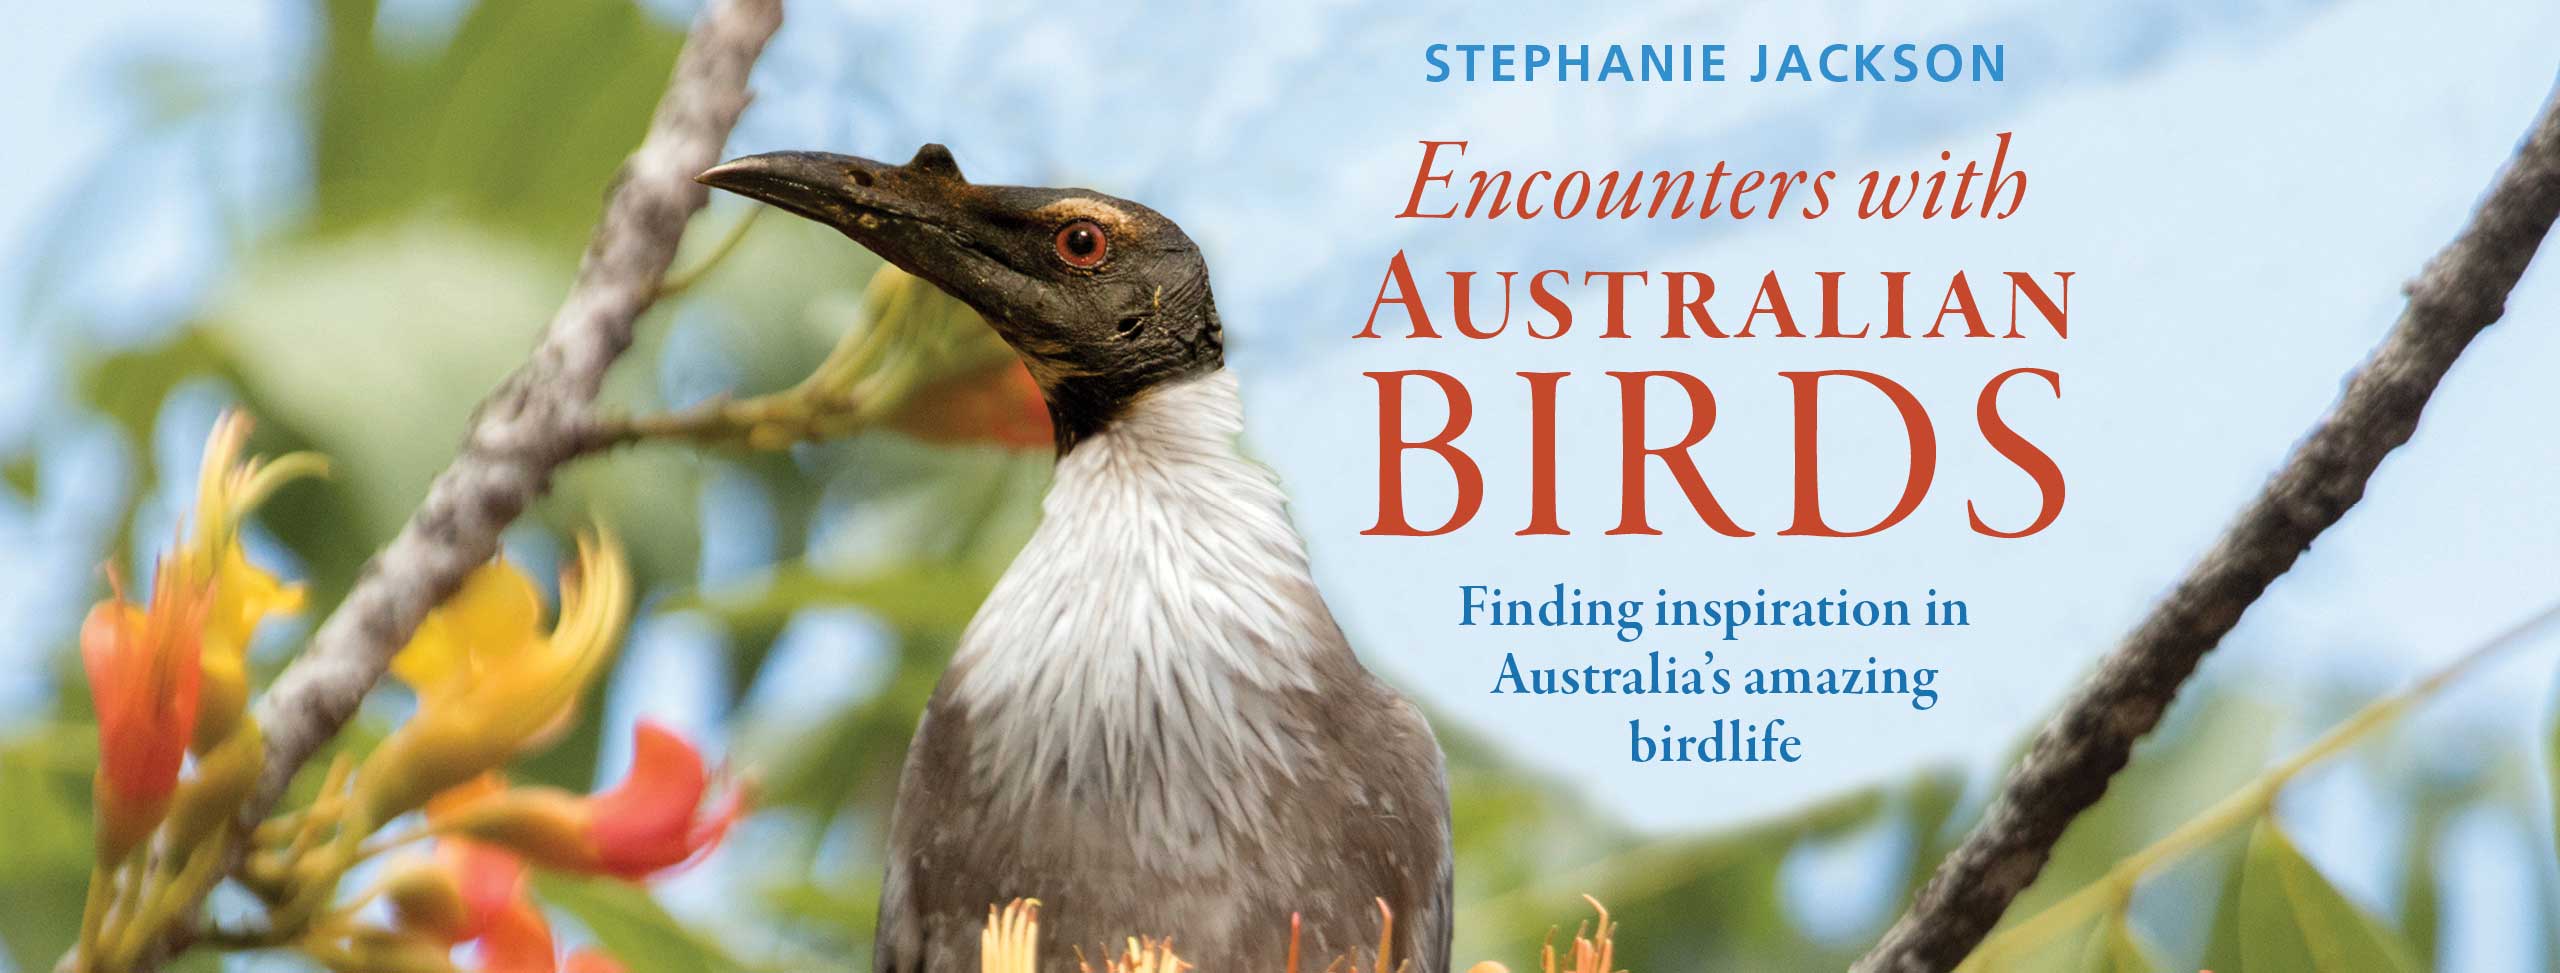 Encounters with Australian Birds